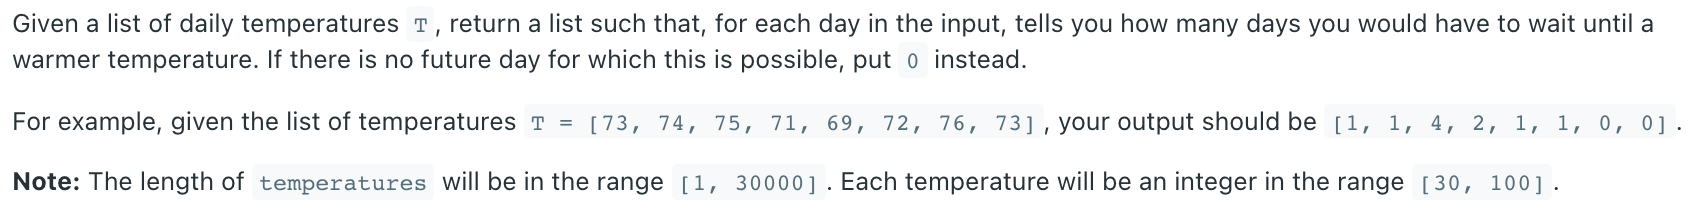 https://leetcode.com/problems/daily-temperatures